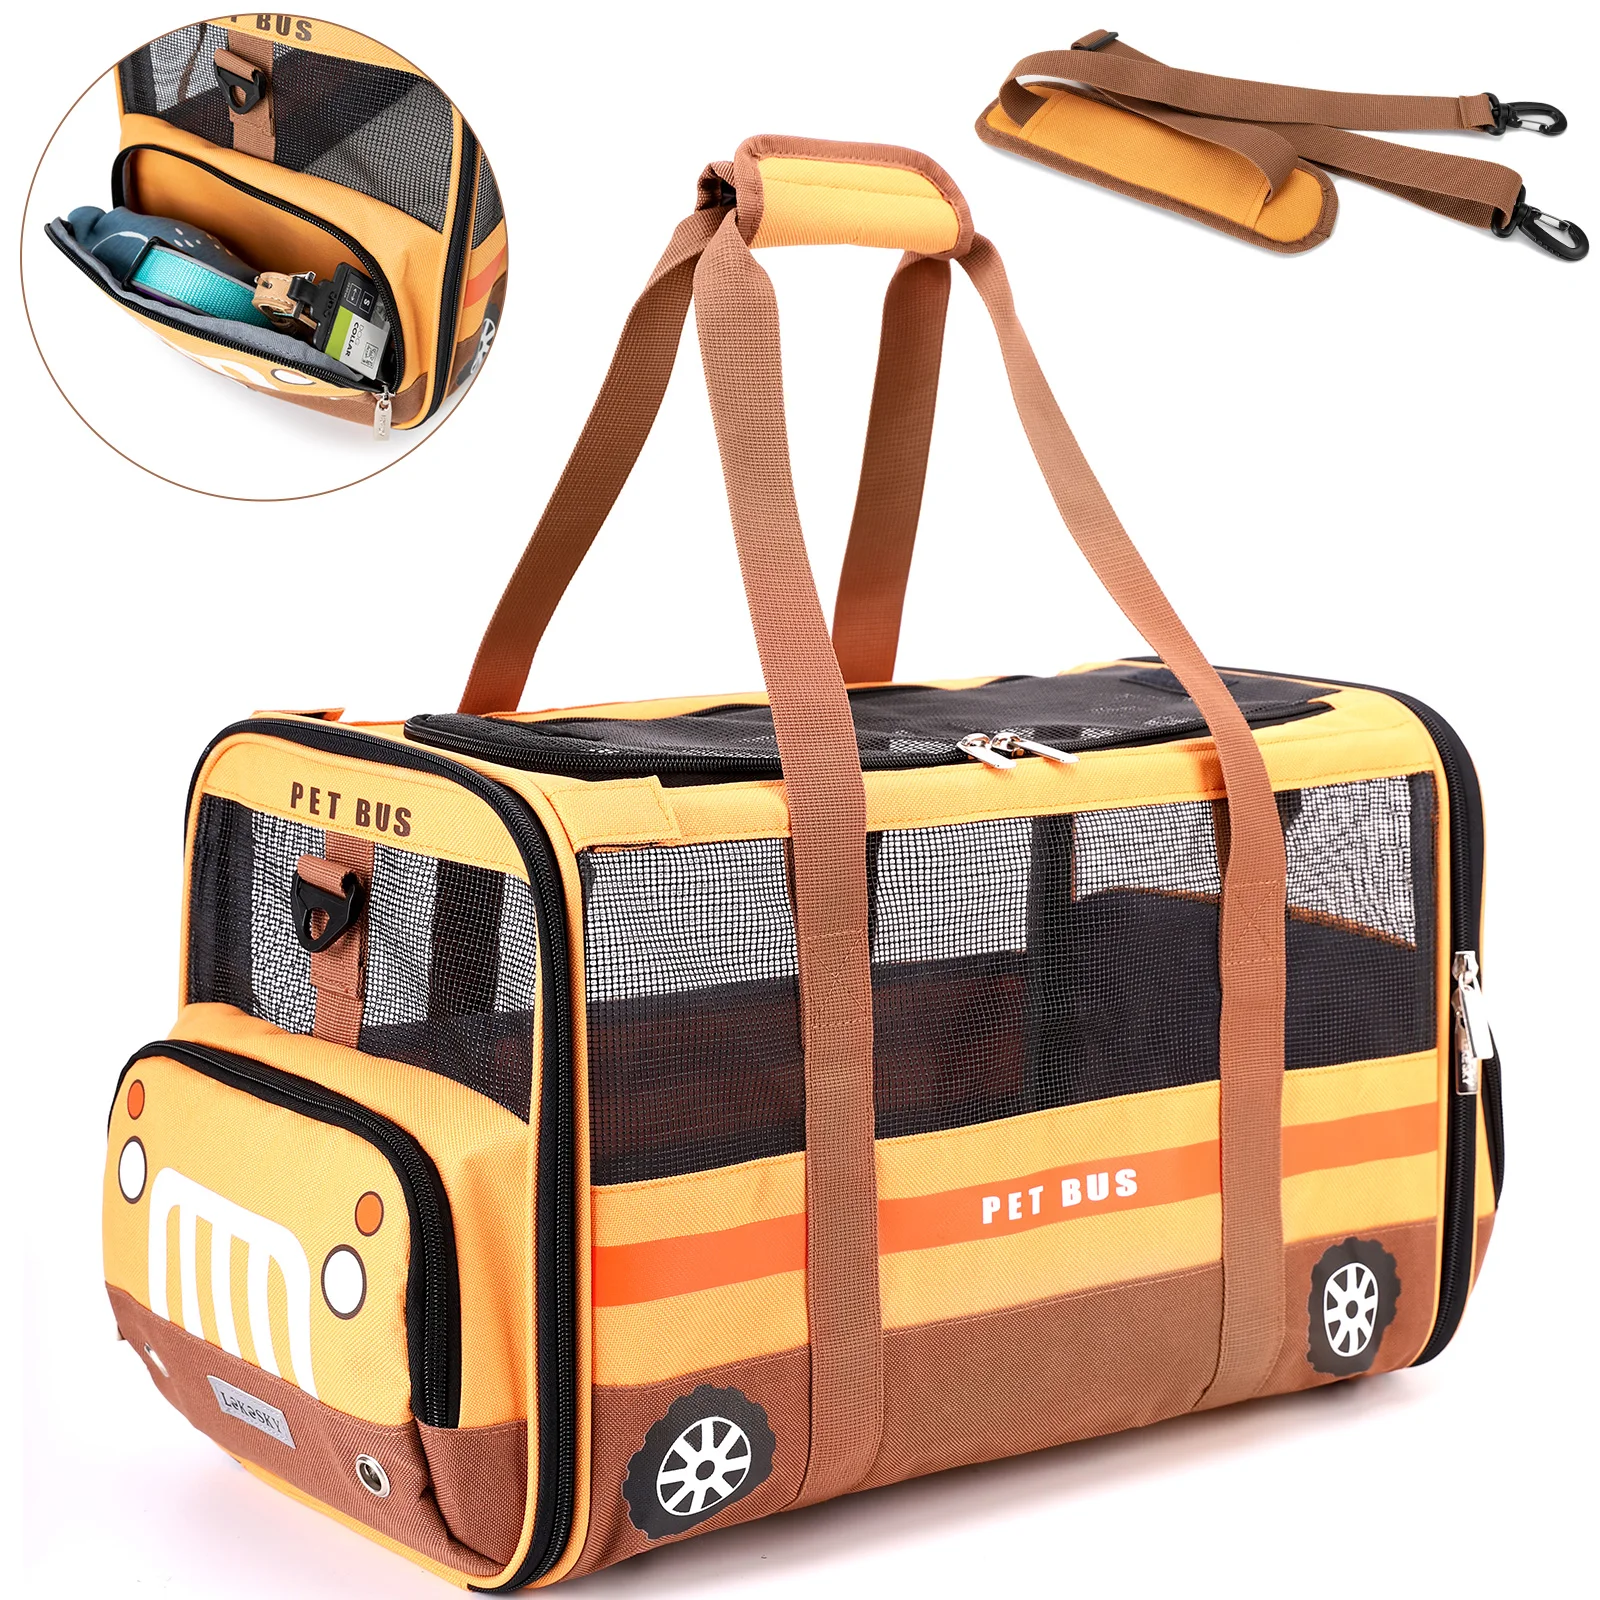 

Outdoor dog travel carrying bag pet bags bus pattern portable pet bag, Orange